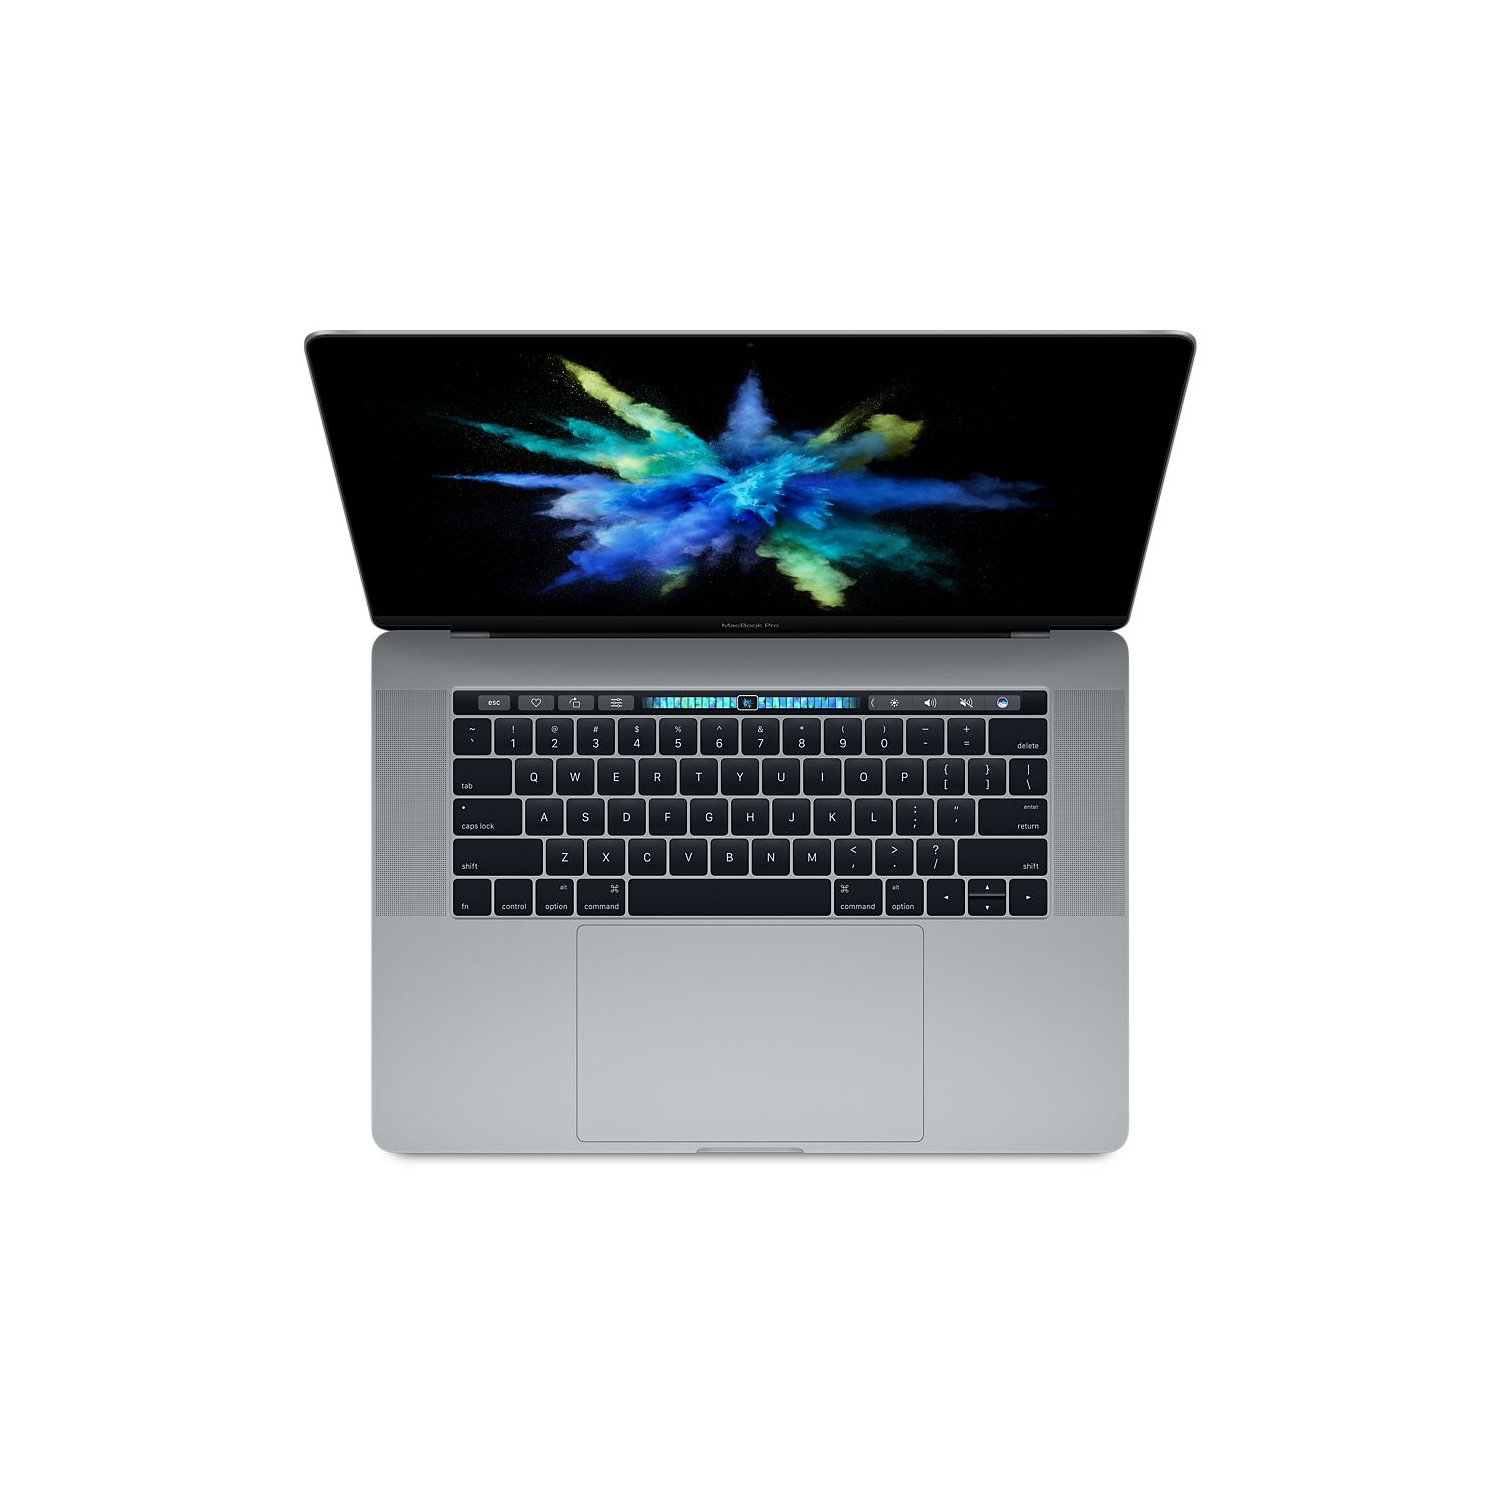 Refurbished (Excellent) - Apple MacBook Pro 15" w/Touchbar - Intel Core i7 2.9GHz - 16GB RAM - 256GB SSD - A1707 - (2017 Model)